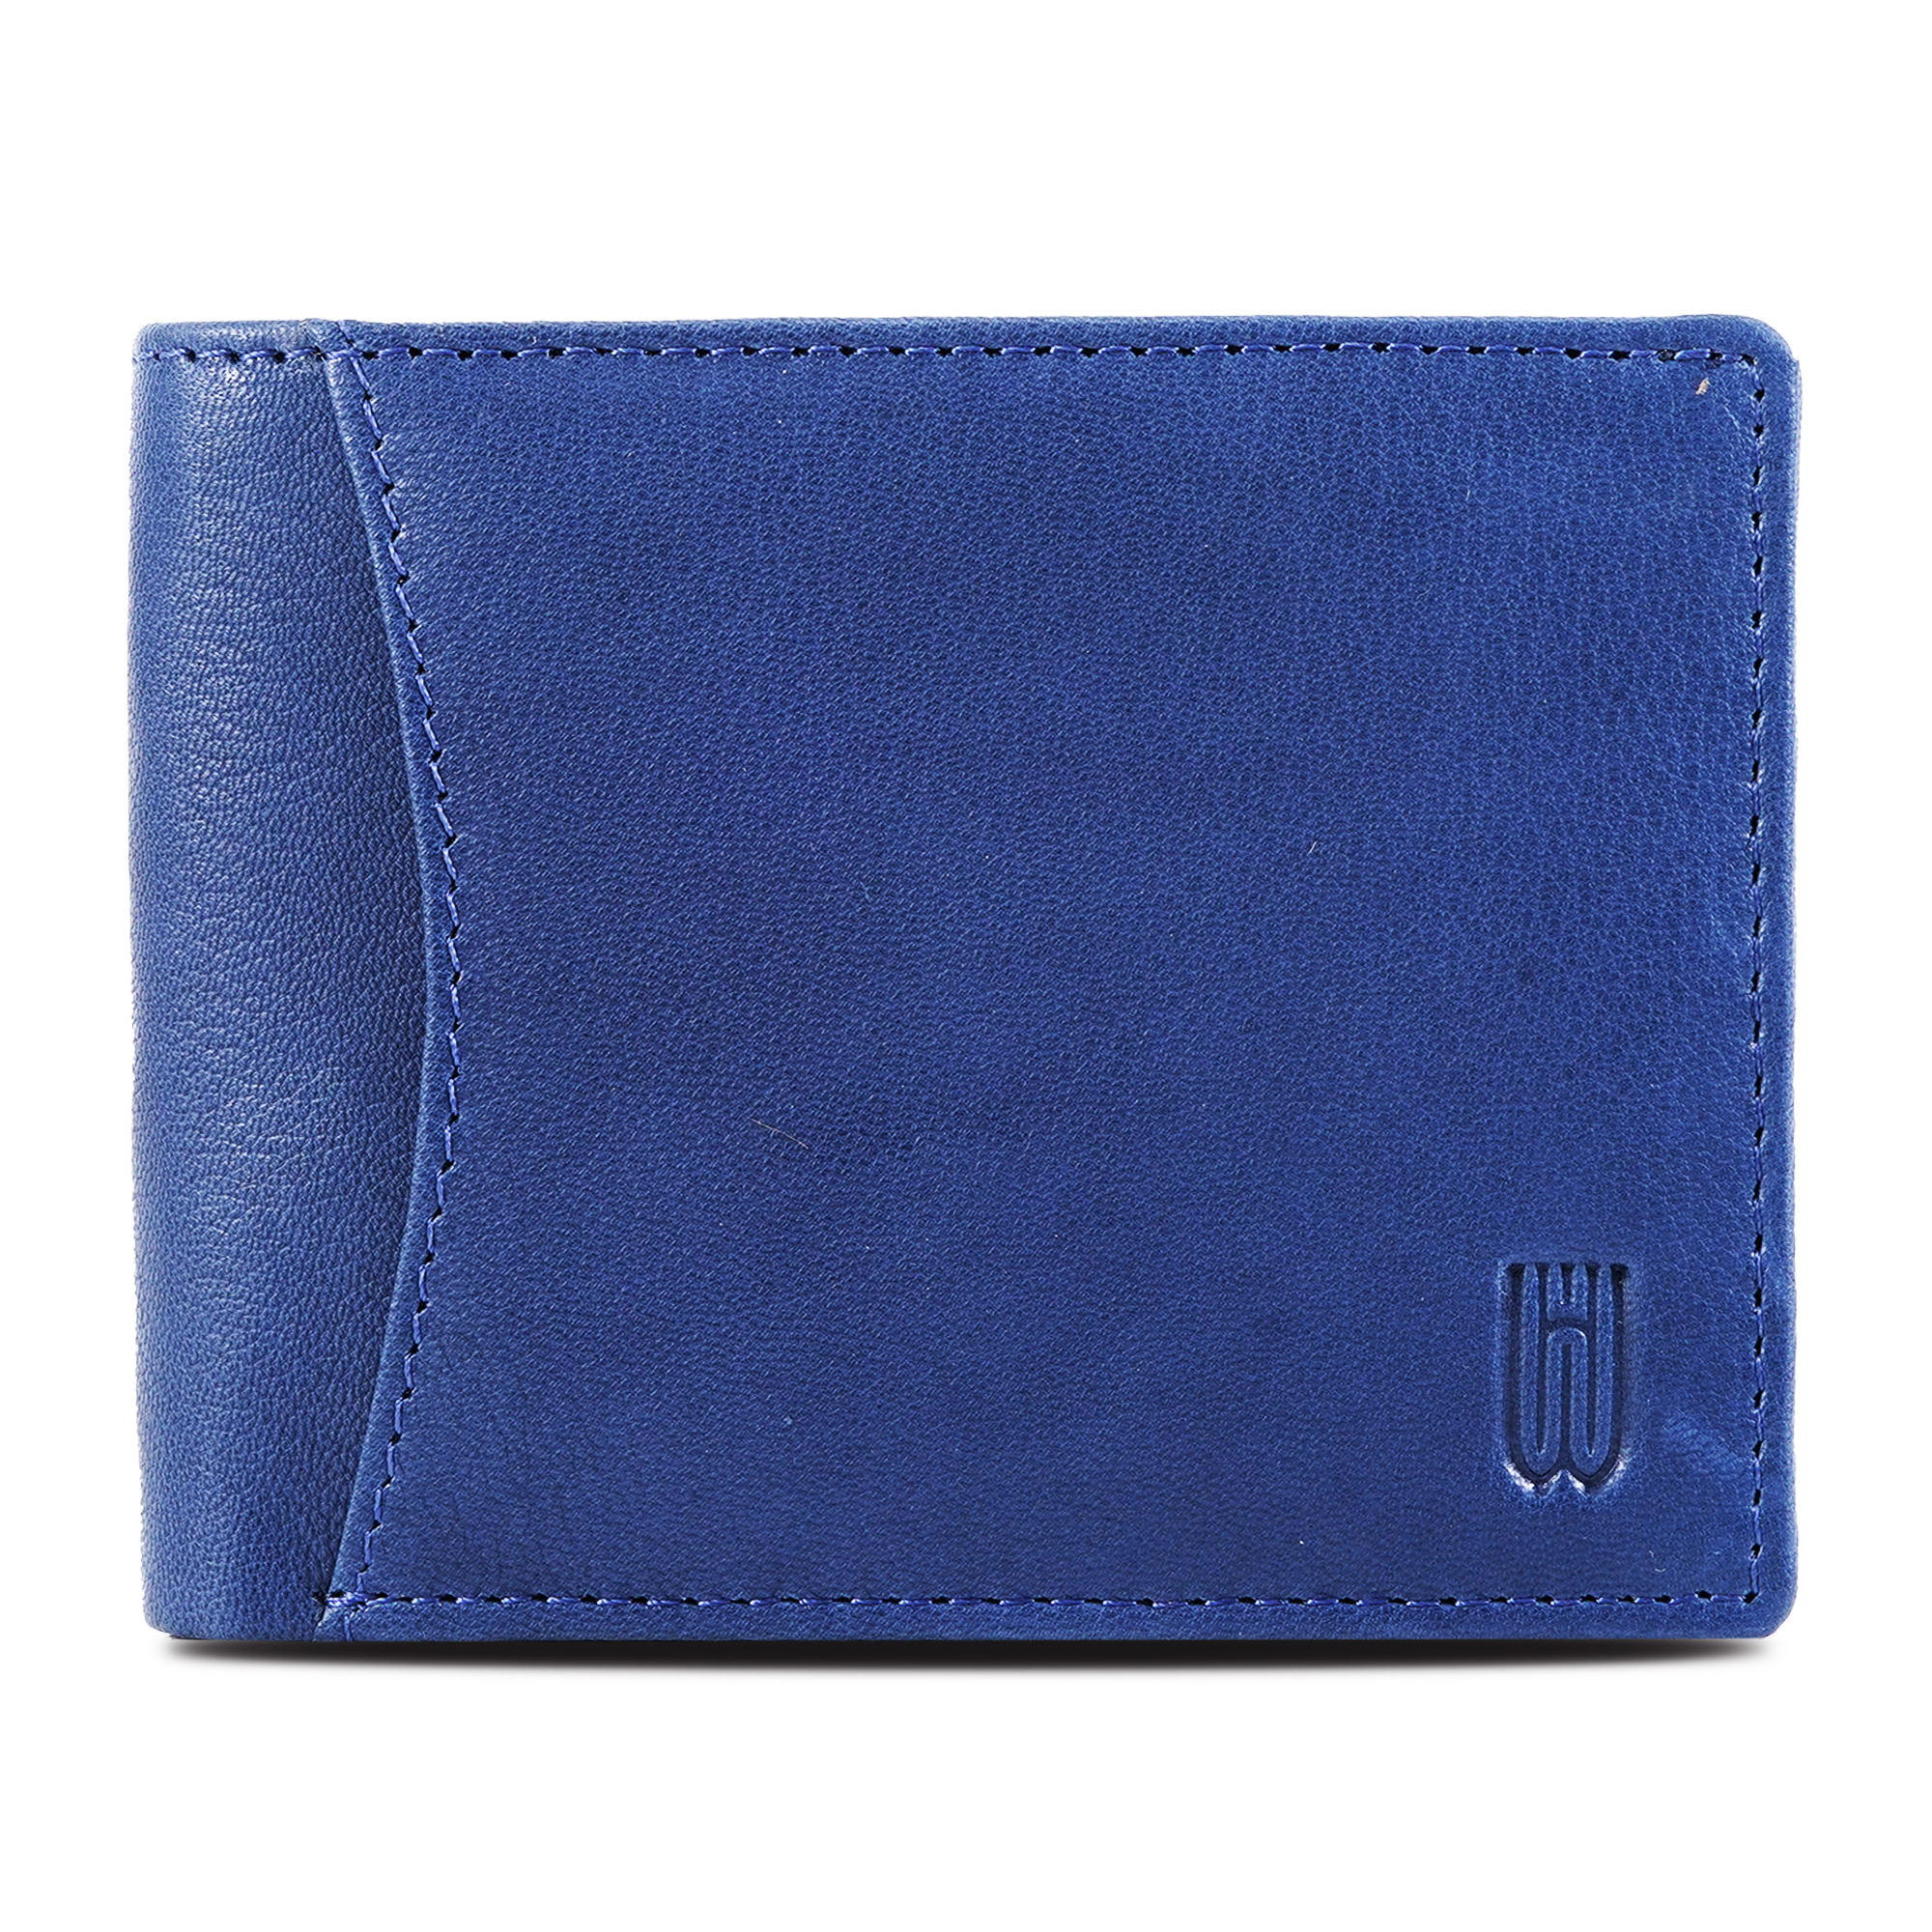 Leather Belt Wallet Combo For Men (Tan-Blue)